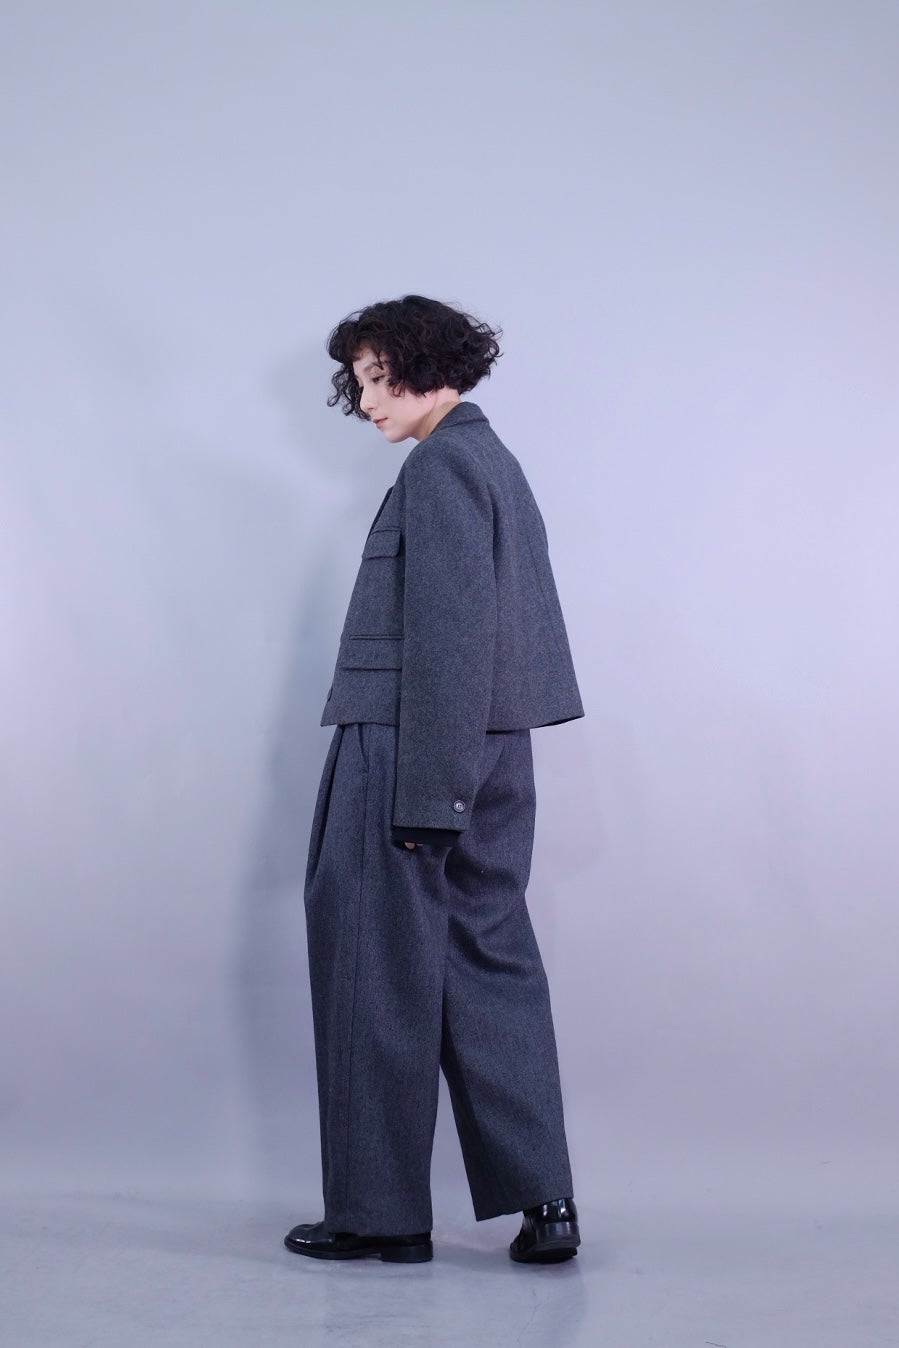 Wool pleated peg pants - 2 colours